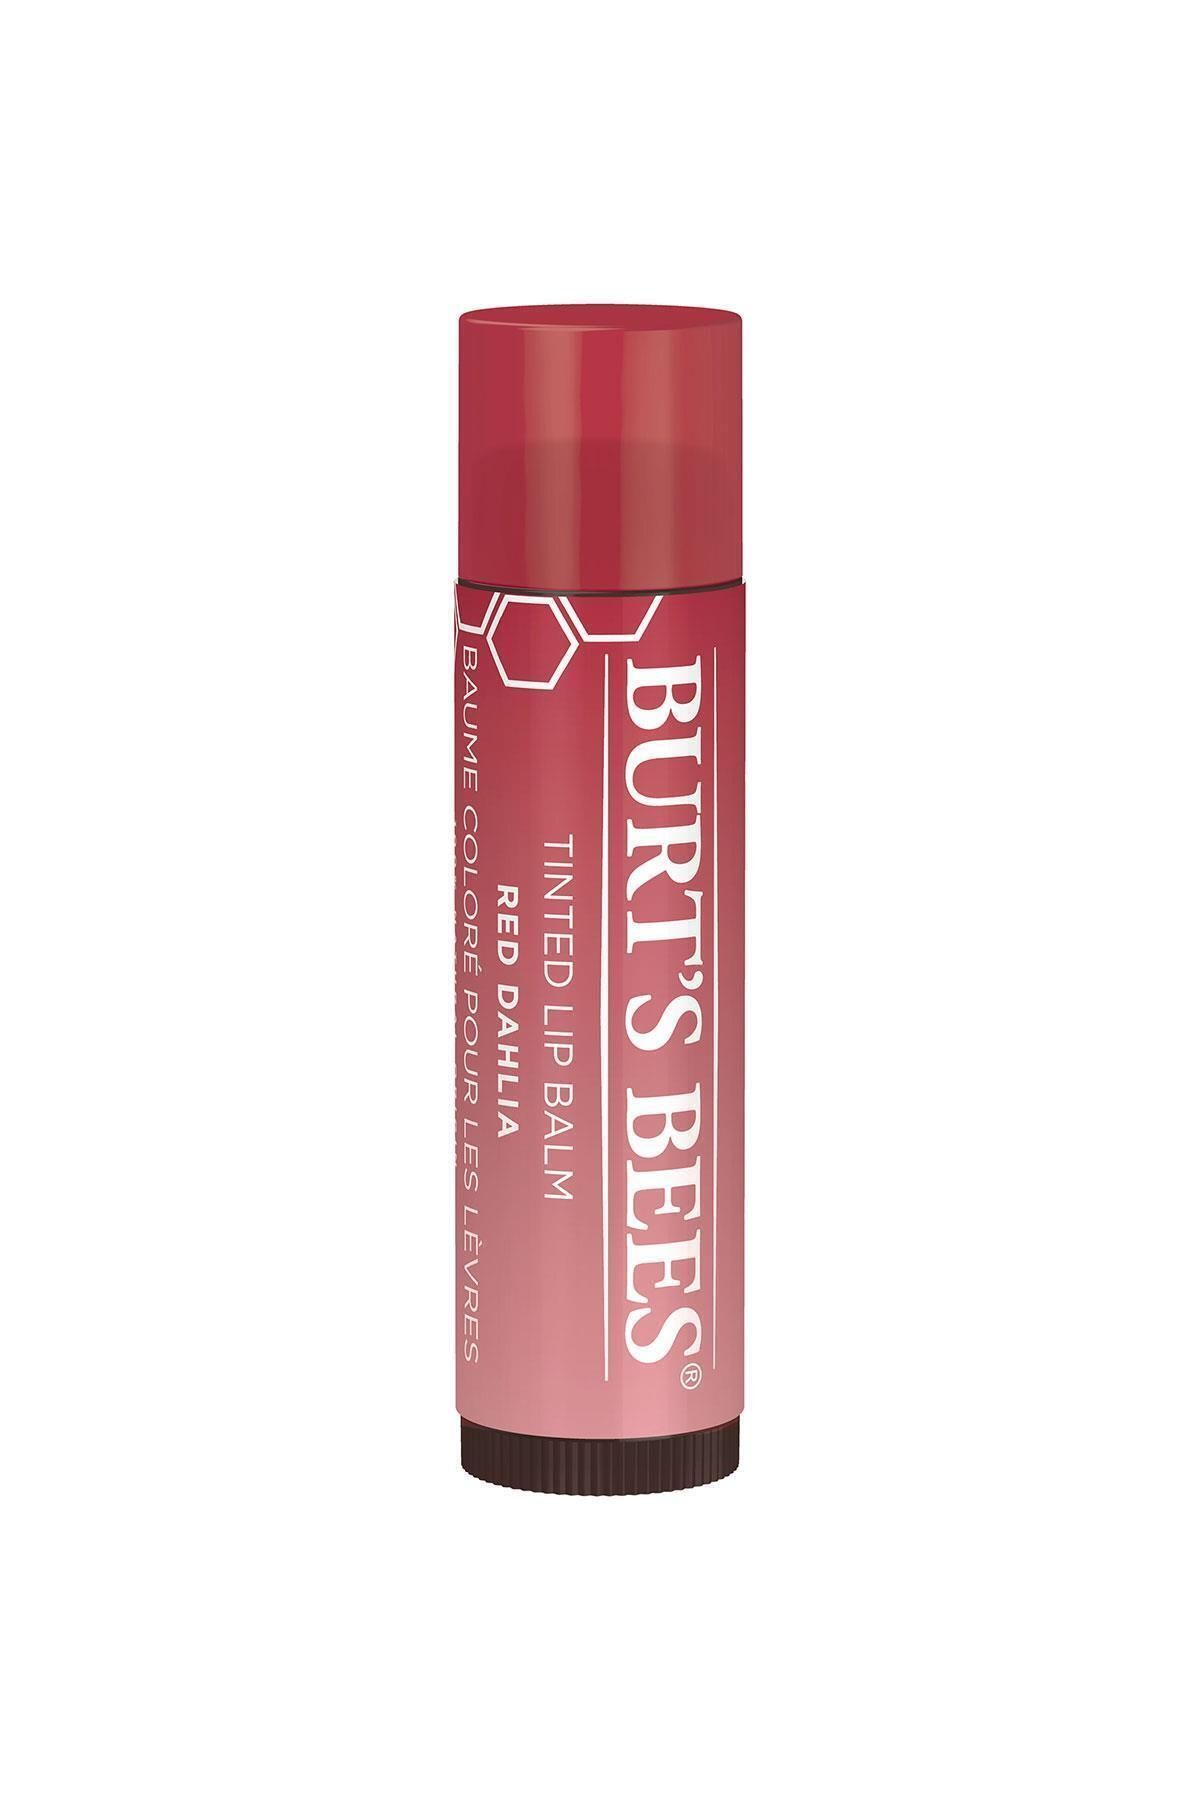 Burt's Bees Renkli Dudak Bakım Kremi Vişne - Tinted Lip Balm Red Dahlia 4,25 gr